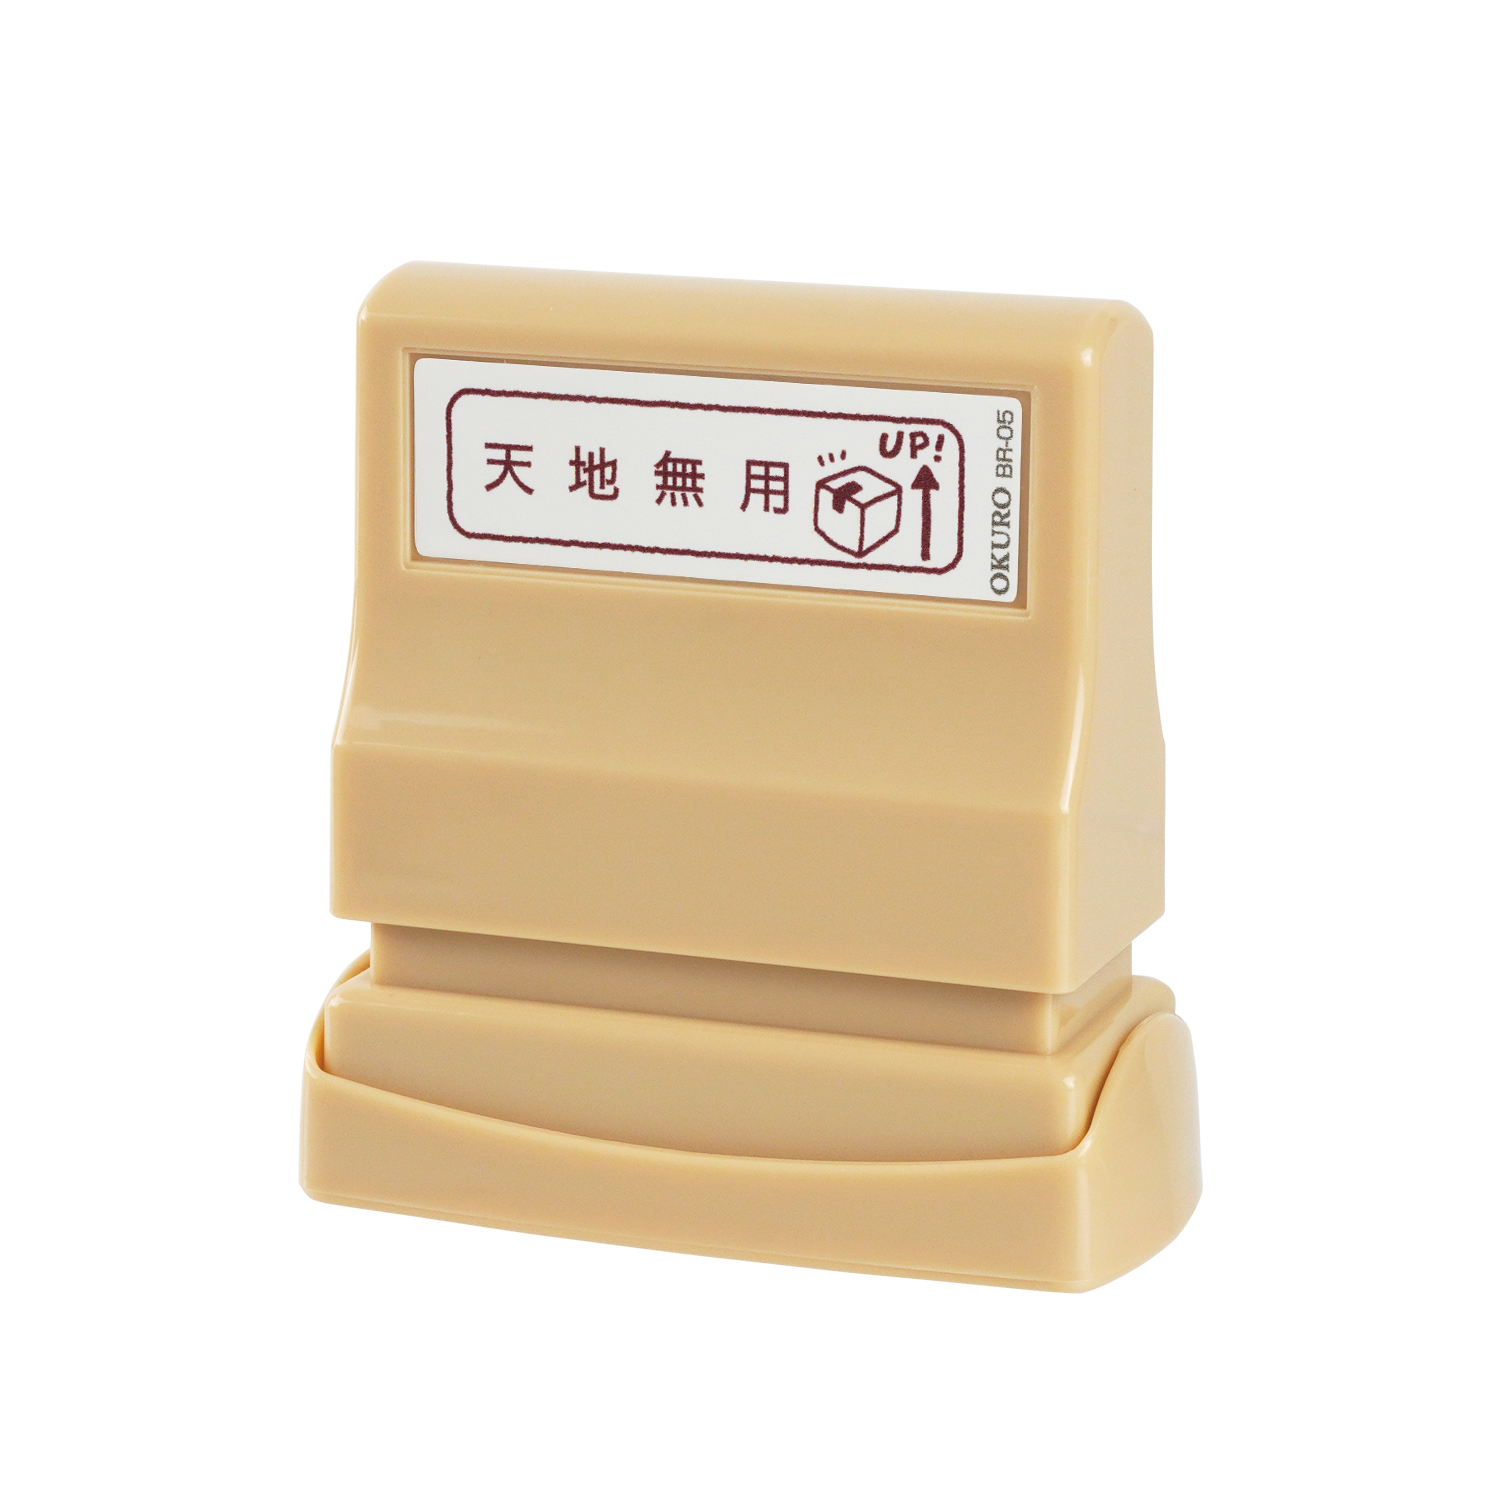 OKURO Sサイズ 茶 上積厳禁|PEO-SA-BR-07|商品カタログ|シヤチハタ株式会社